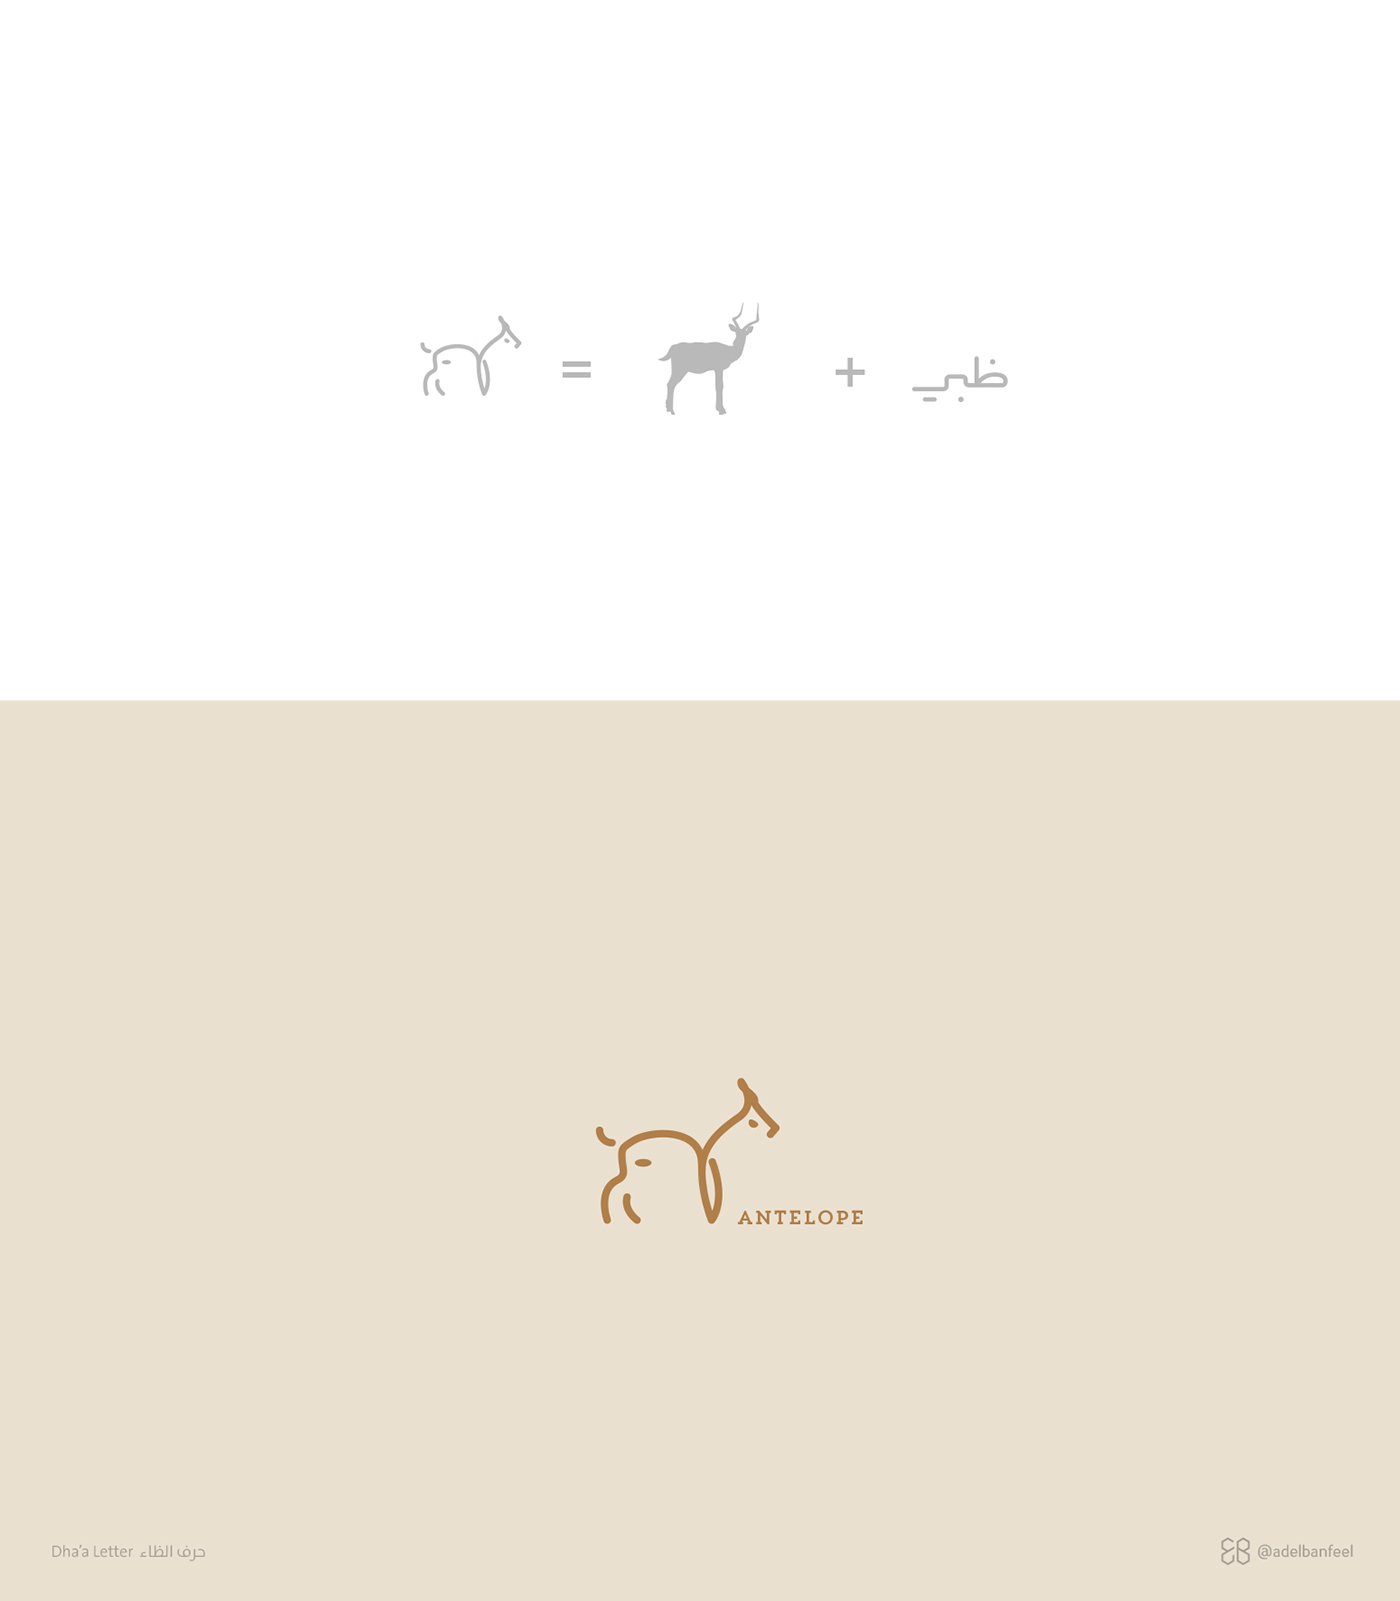 alphabetic zoo animals logos Calligraphy   typography   letters art idea ILLUSTRATION 